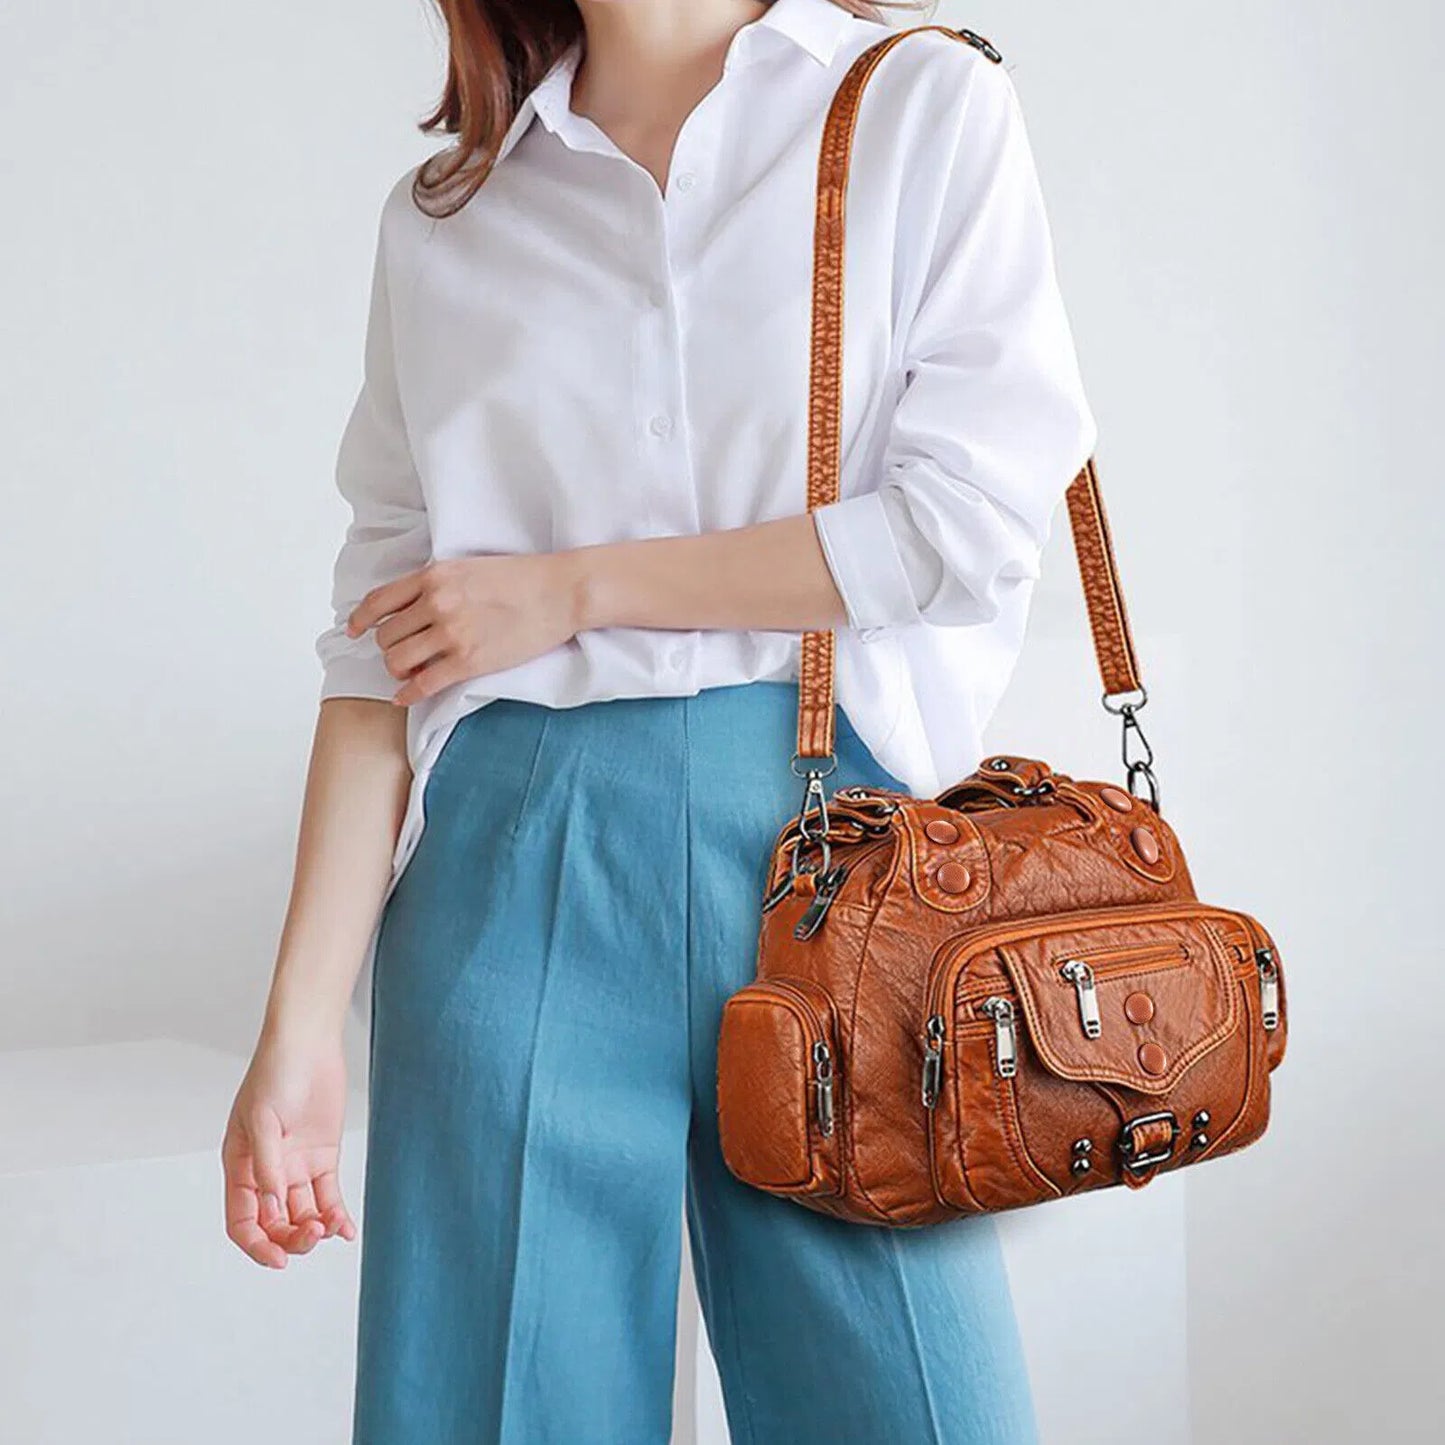 Soft Women Bag Faux Leather Large Shoulder Tote Crossbody Hobo Bag Handbag Purse